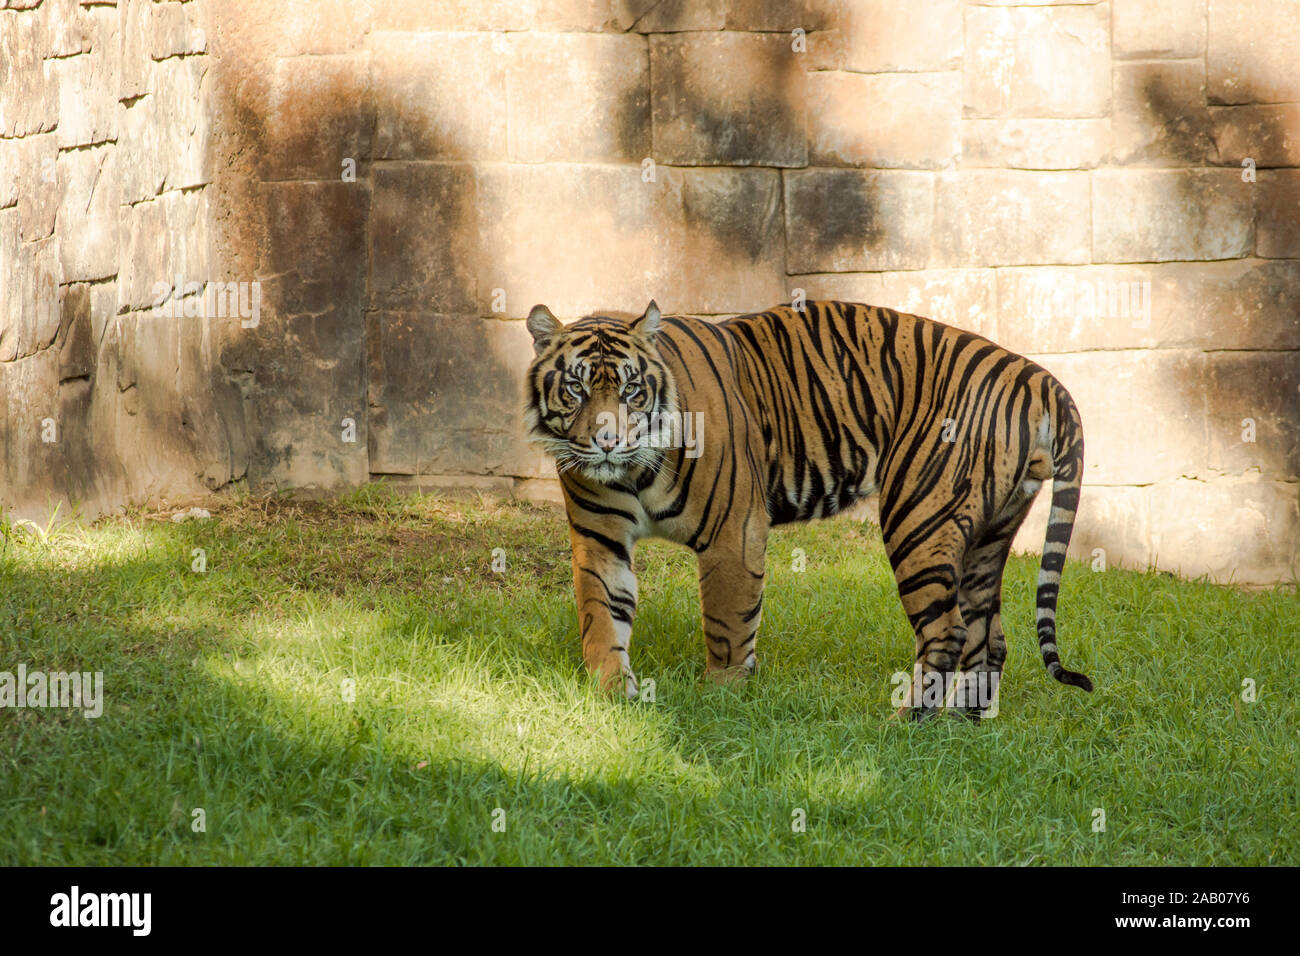 Tigre de Sumatra, Panthera tigris sumatrae en pièce jointe, le zoo Bioparc Fuengirola, Espagne. Banque D'Images